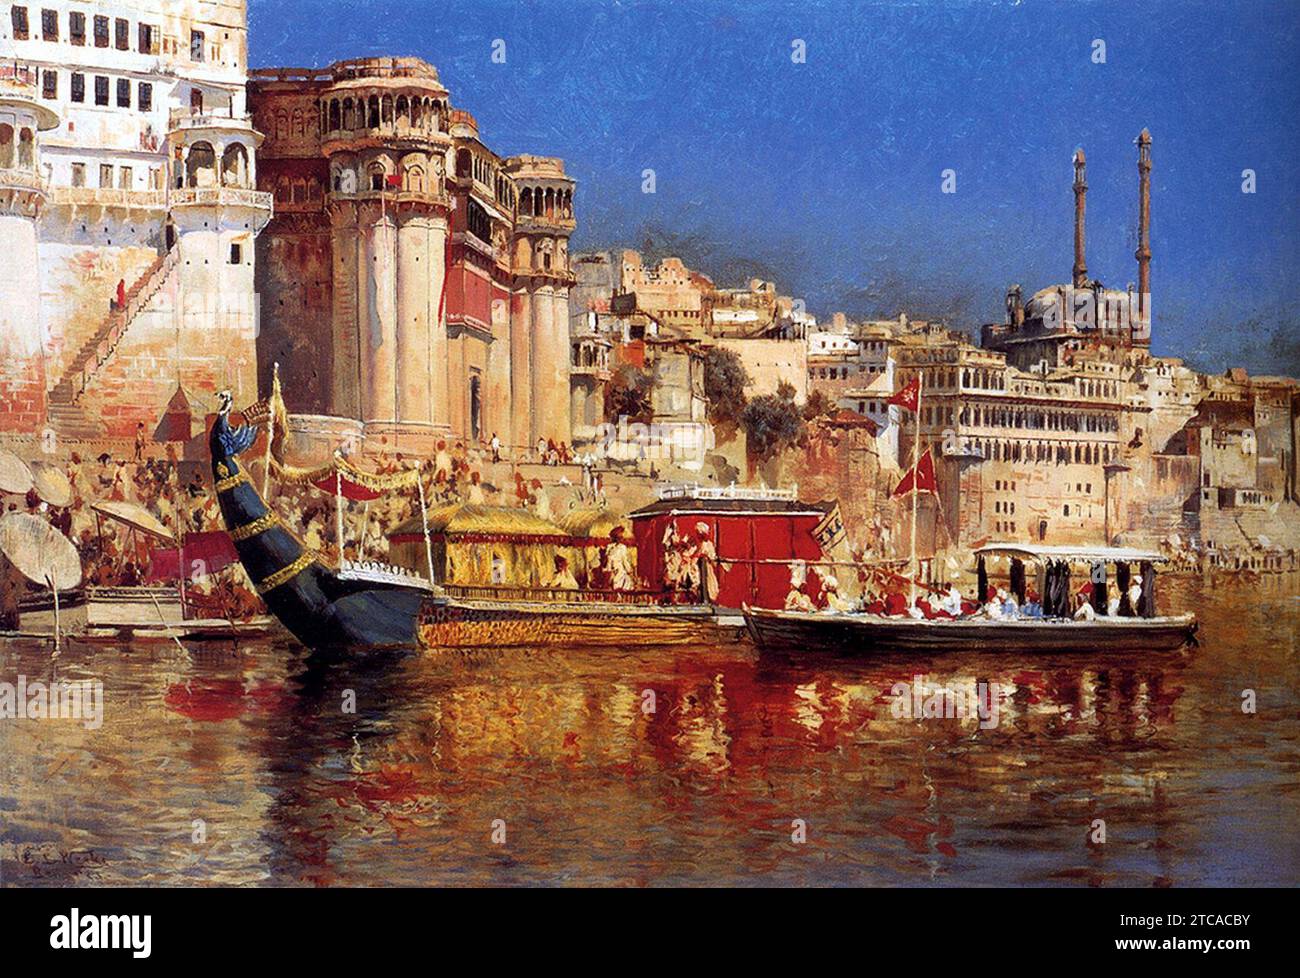 Semaines Edwin la barge du Maharaja de Benares. Banque D'Images